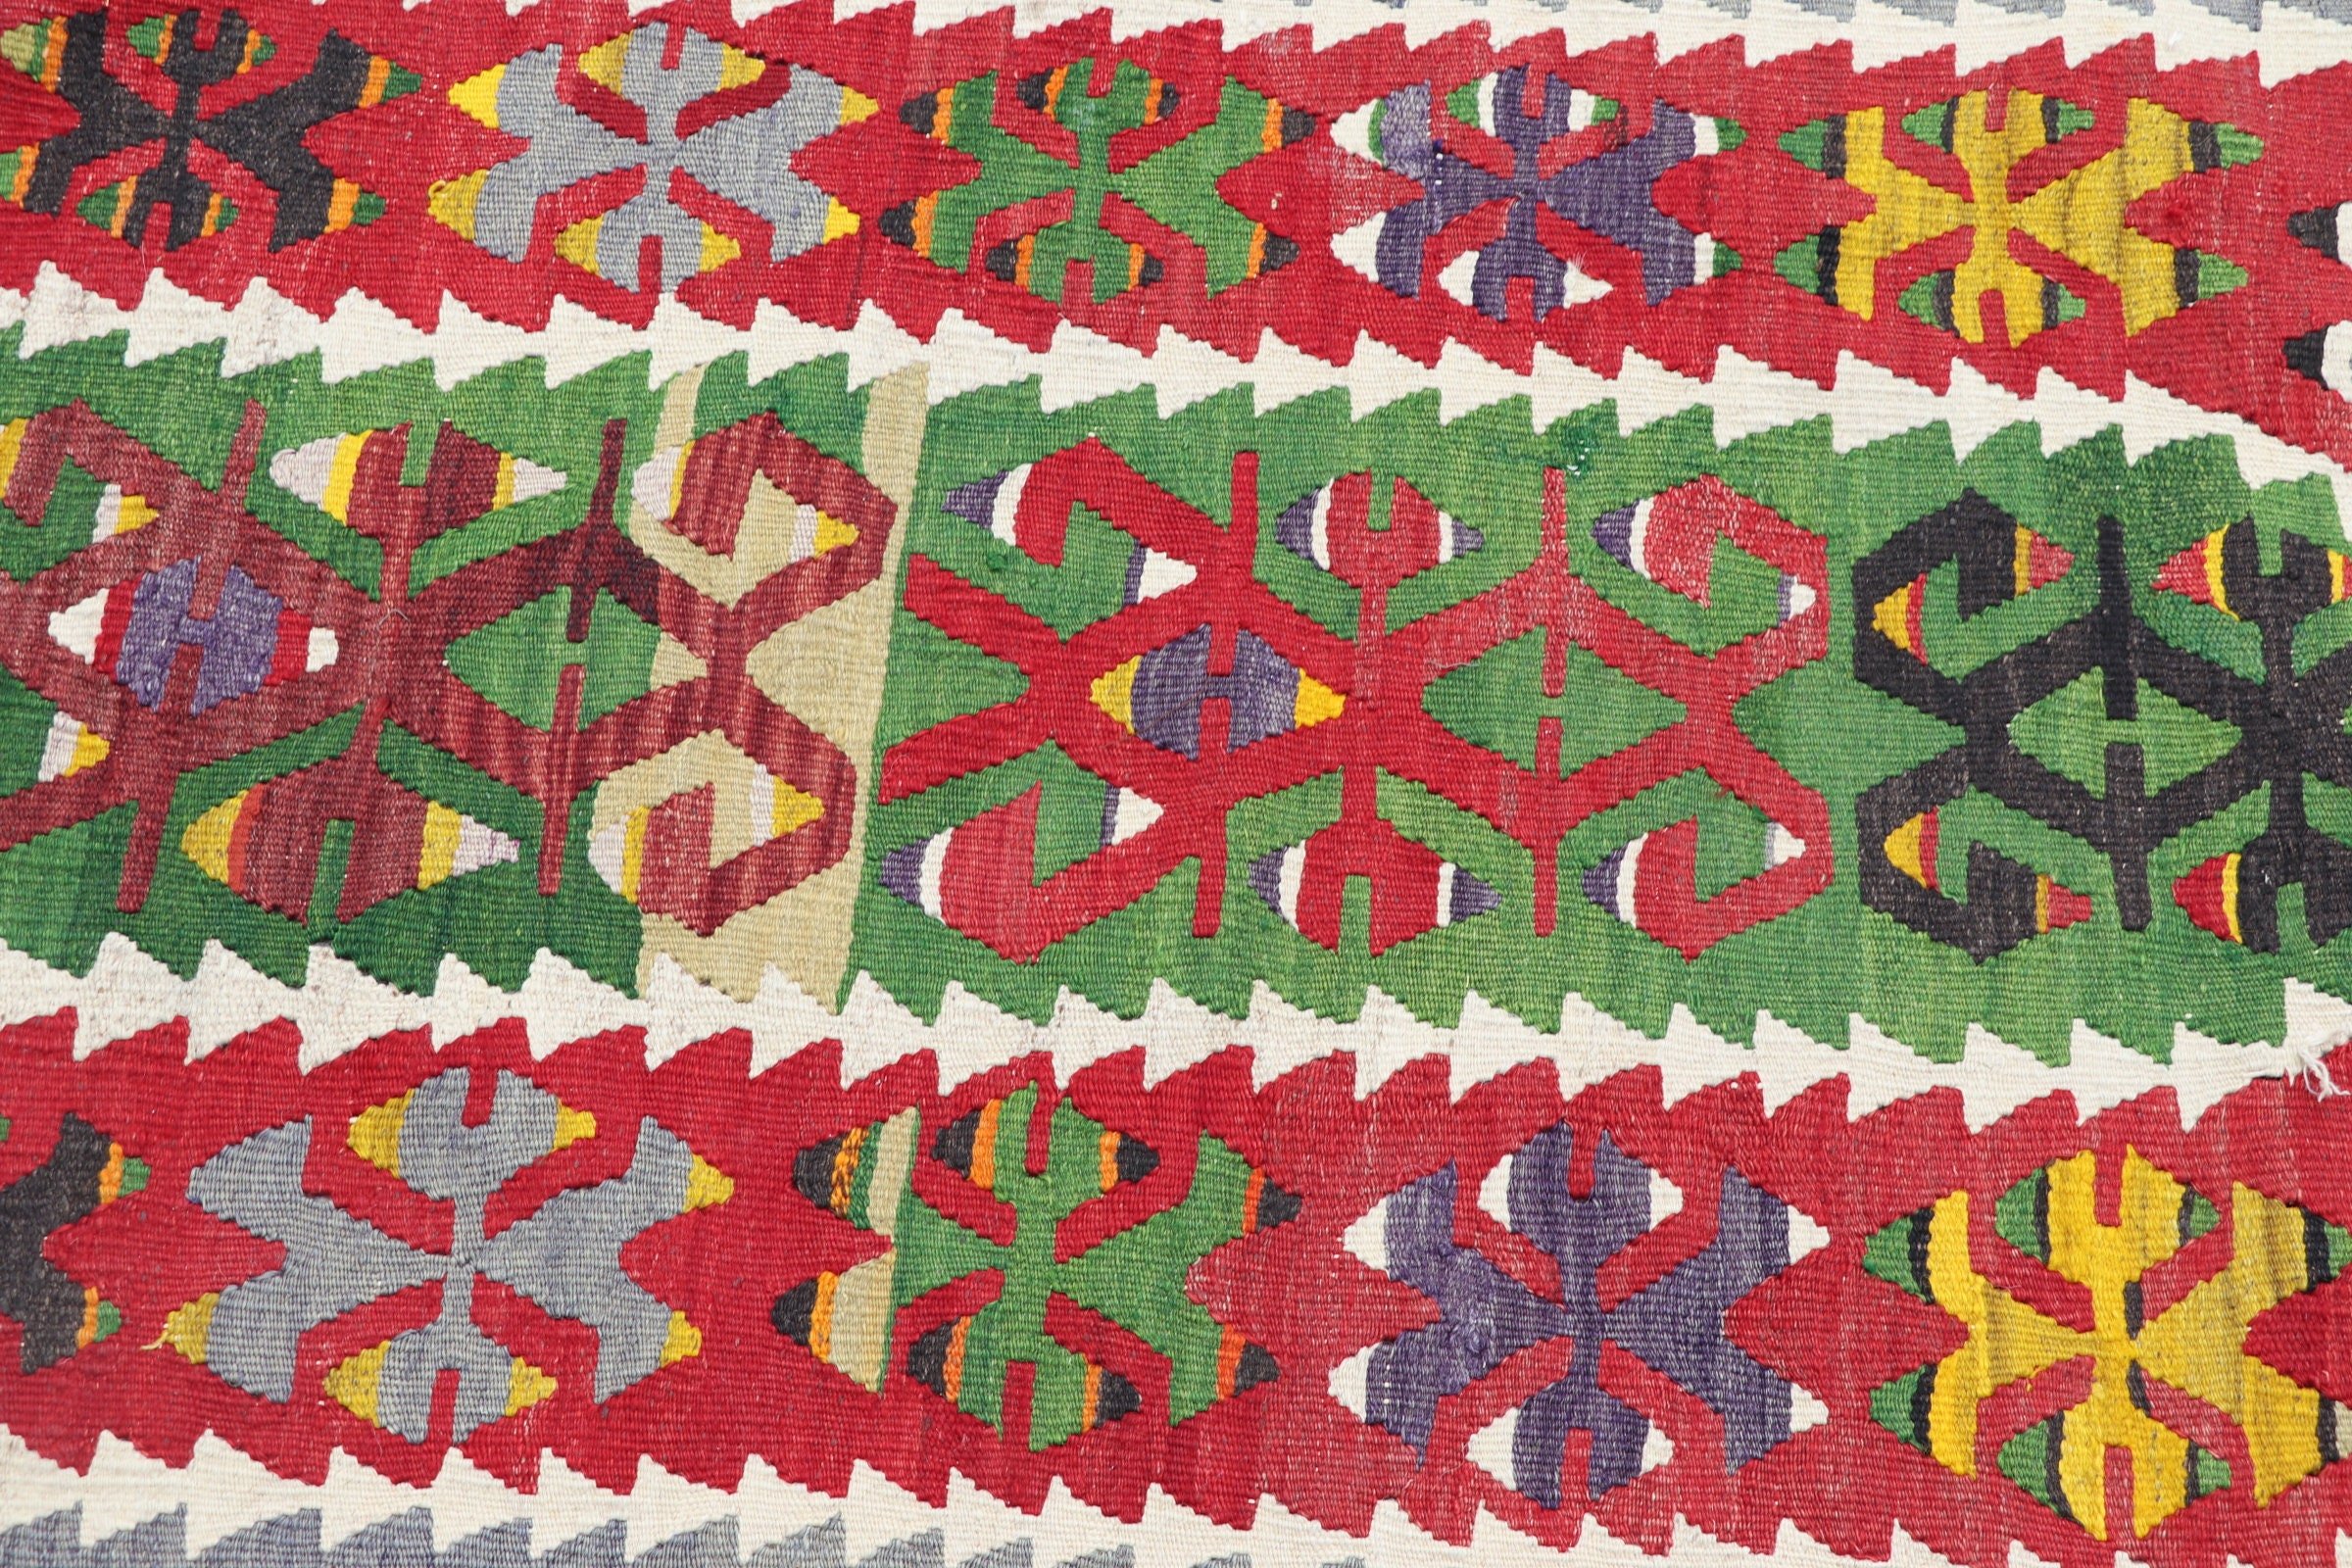 Turkish Rug, Moroccan Rug, Door Mat Rug, Kilim, Kitchen Rugs, 2.8x4.1 ft Small Rugs, Vintage Rug, Red Home Decor Rug, Anatolian Rugs